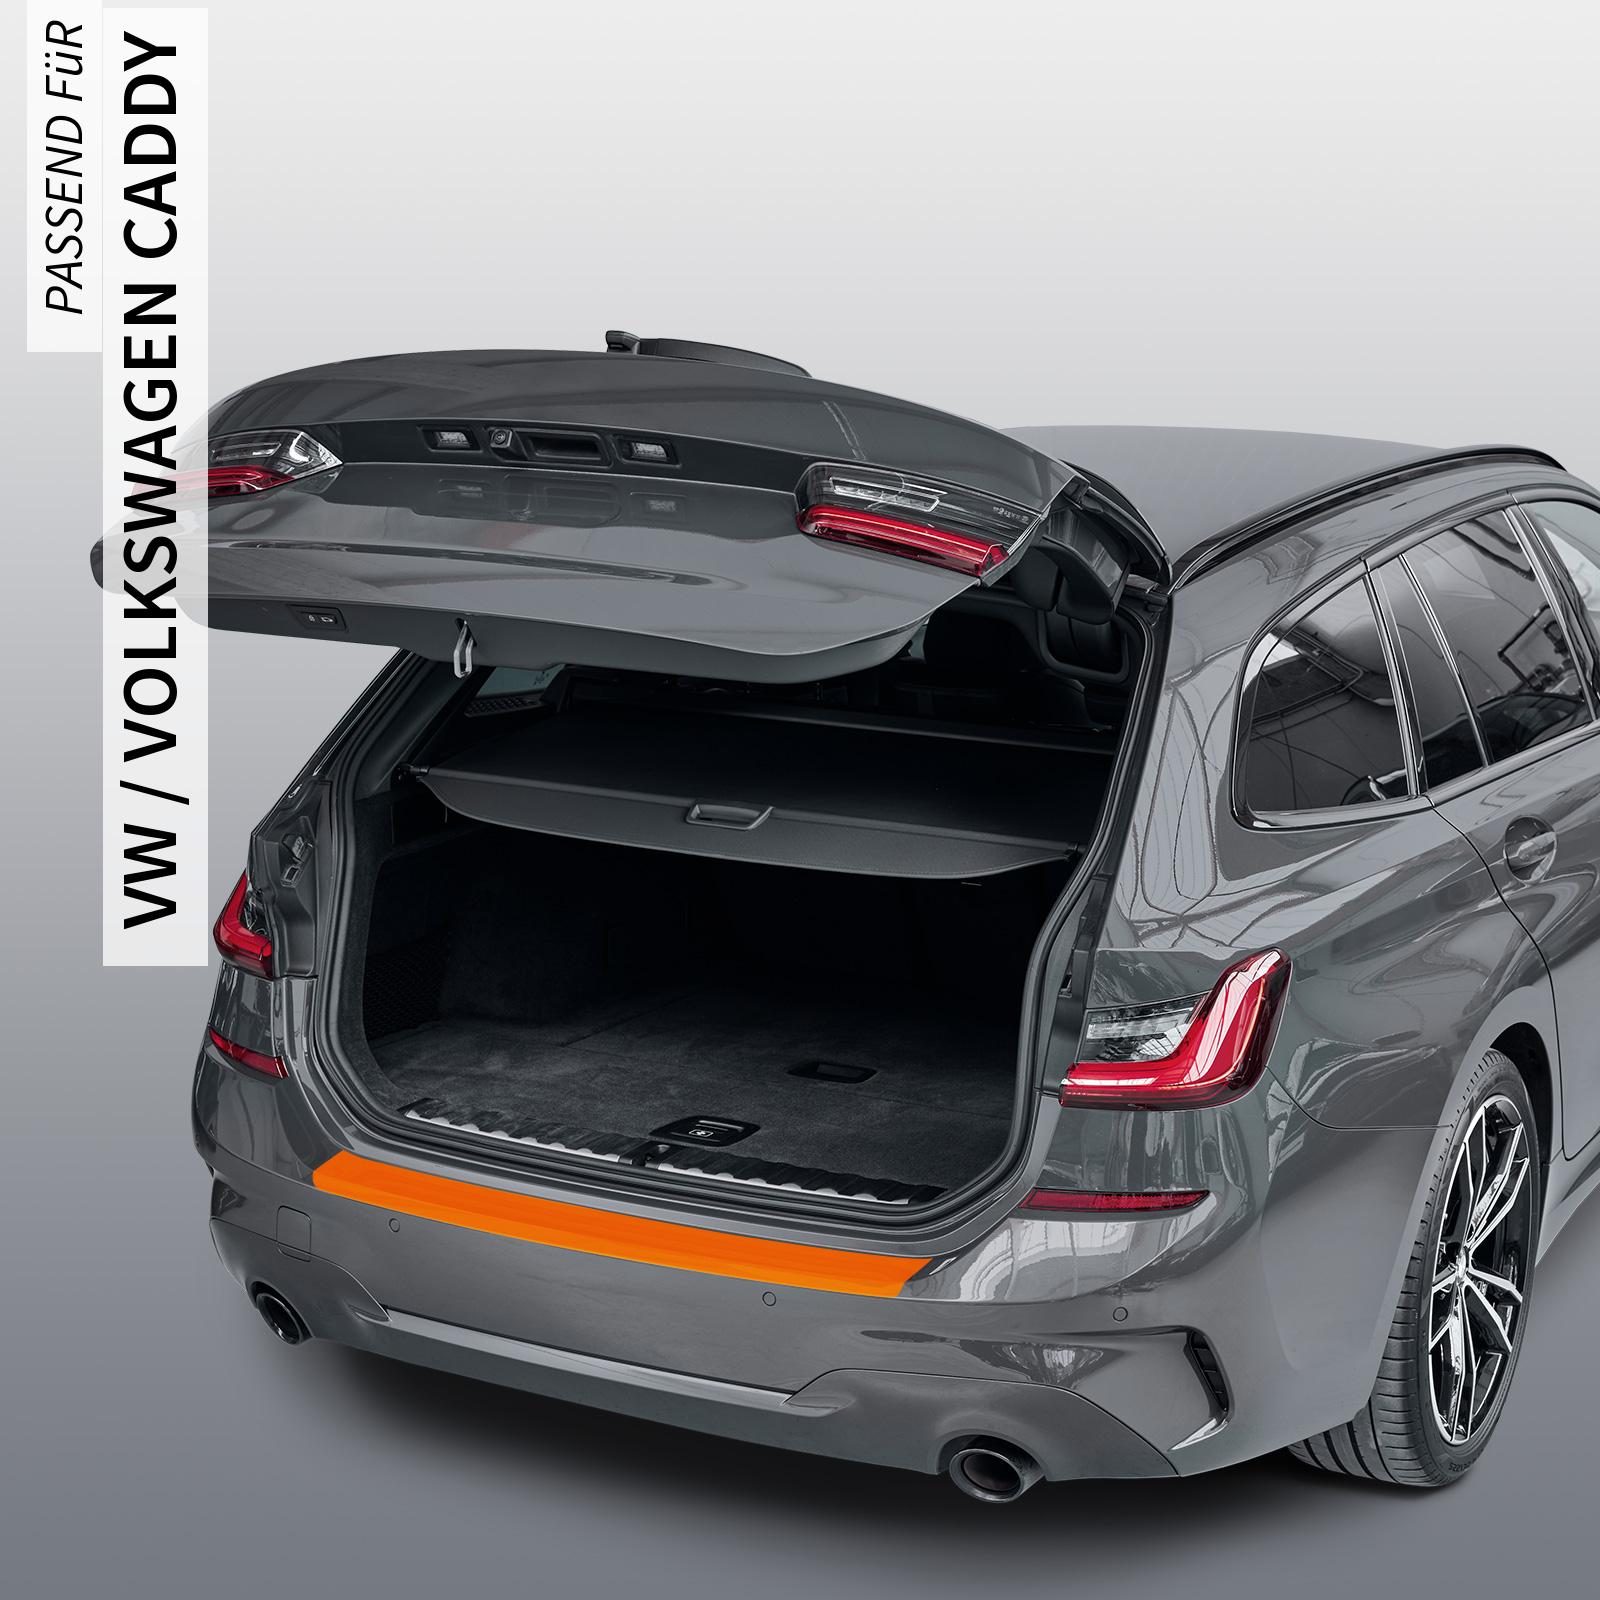 Ladekantenschutzfolie - Transparent Glatt MATT 110 µm stark  für VW / Volkswagen Caddy (IV) 2.Facelift, Typ 2K, BJ 06/2015-2020